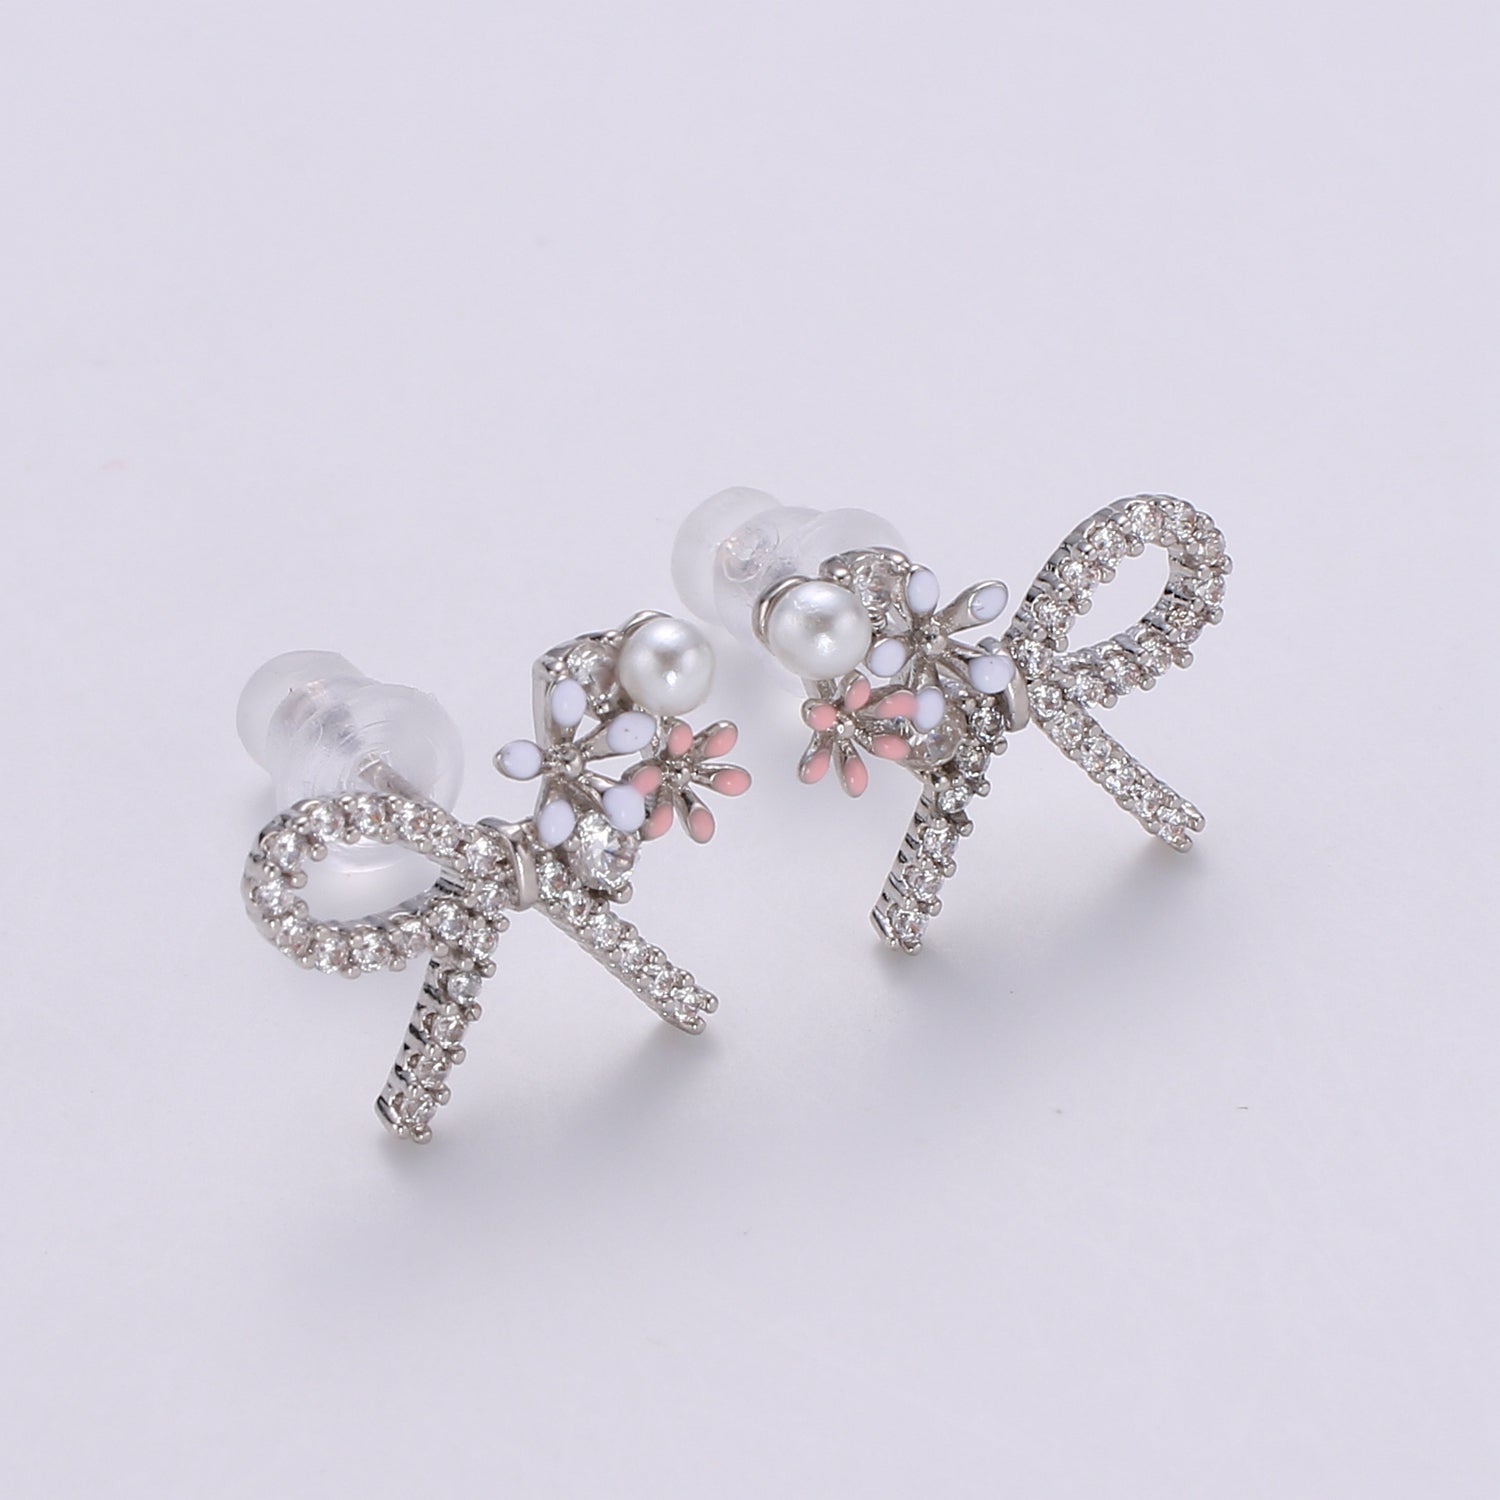 1x Gold Bow Earrings- 24k Gold Tiny Dainty Small Bow White CZ Gem Minimalist Jewelry Studs for Women Q-384 , Q-385 - DLUXCA